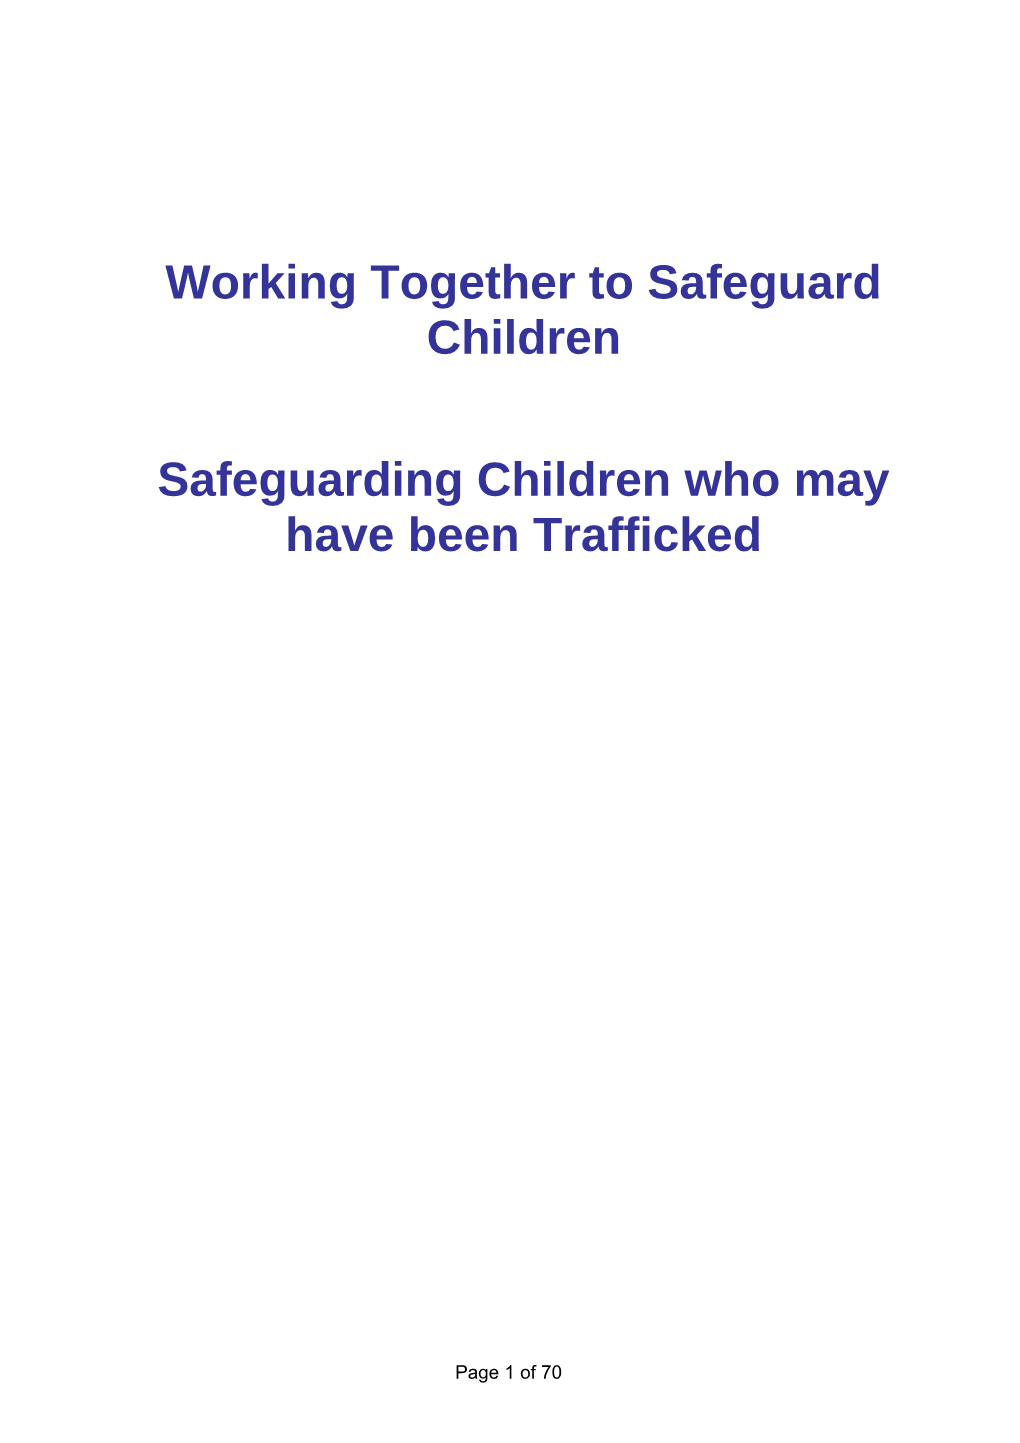 Child Trafficking, Migration and Exploitation